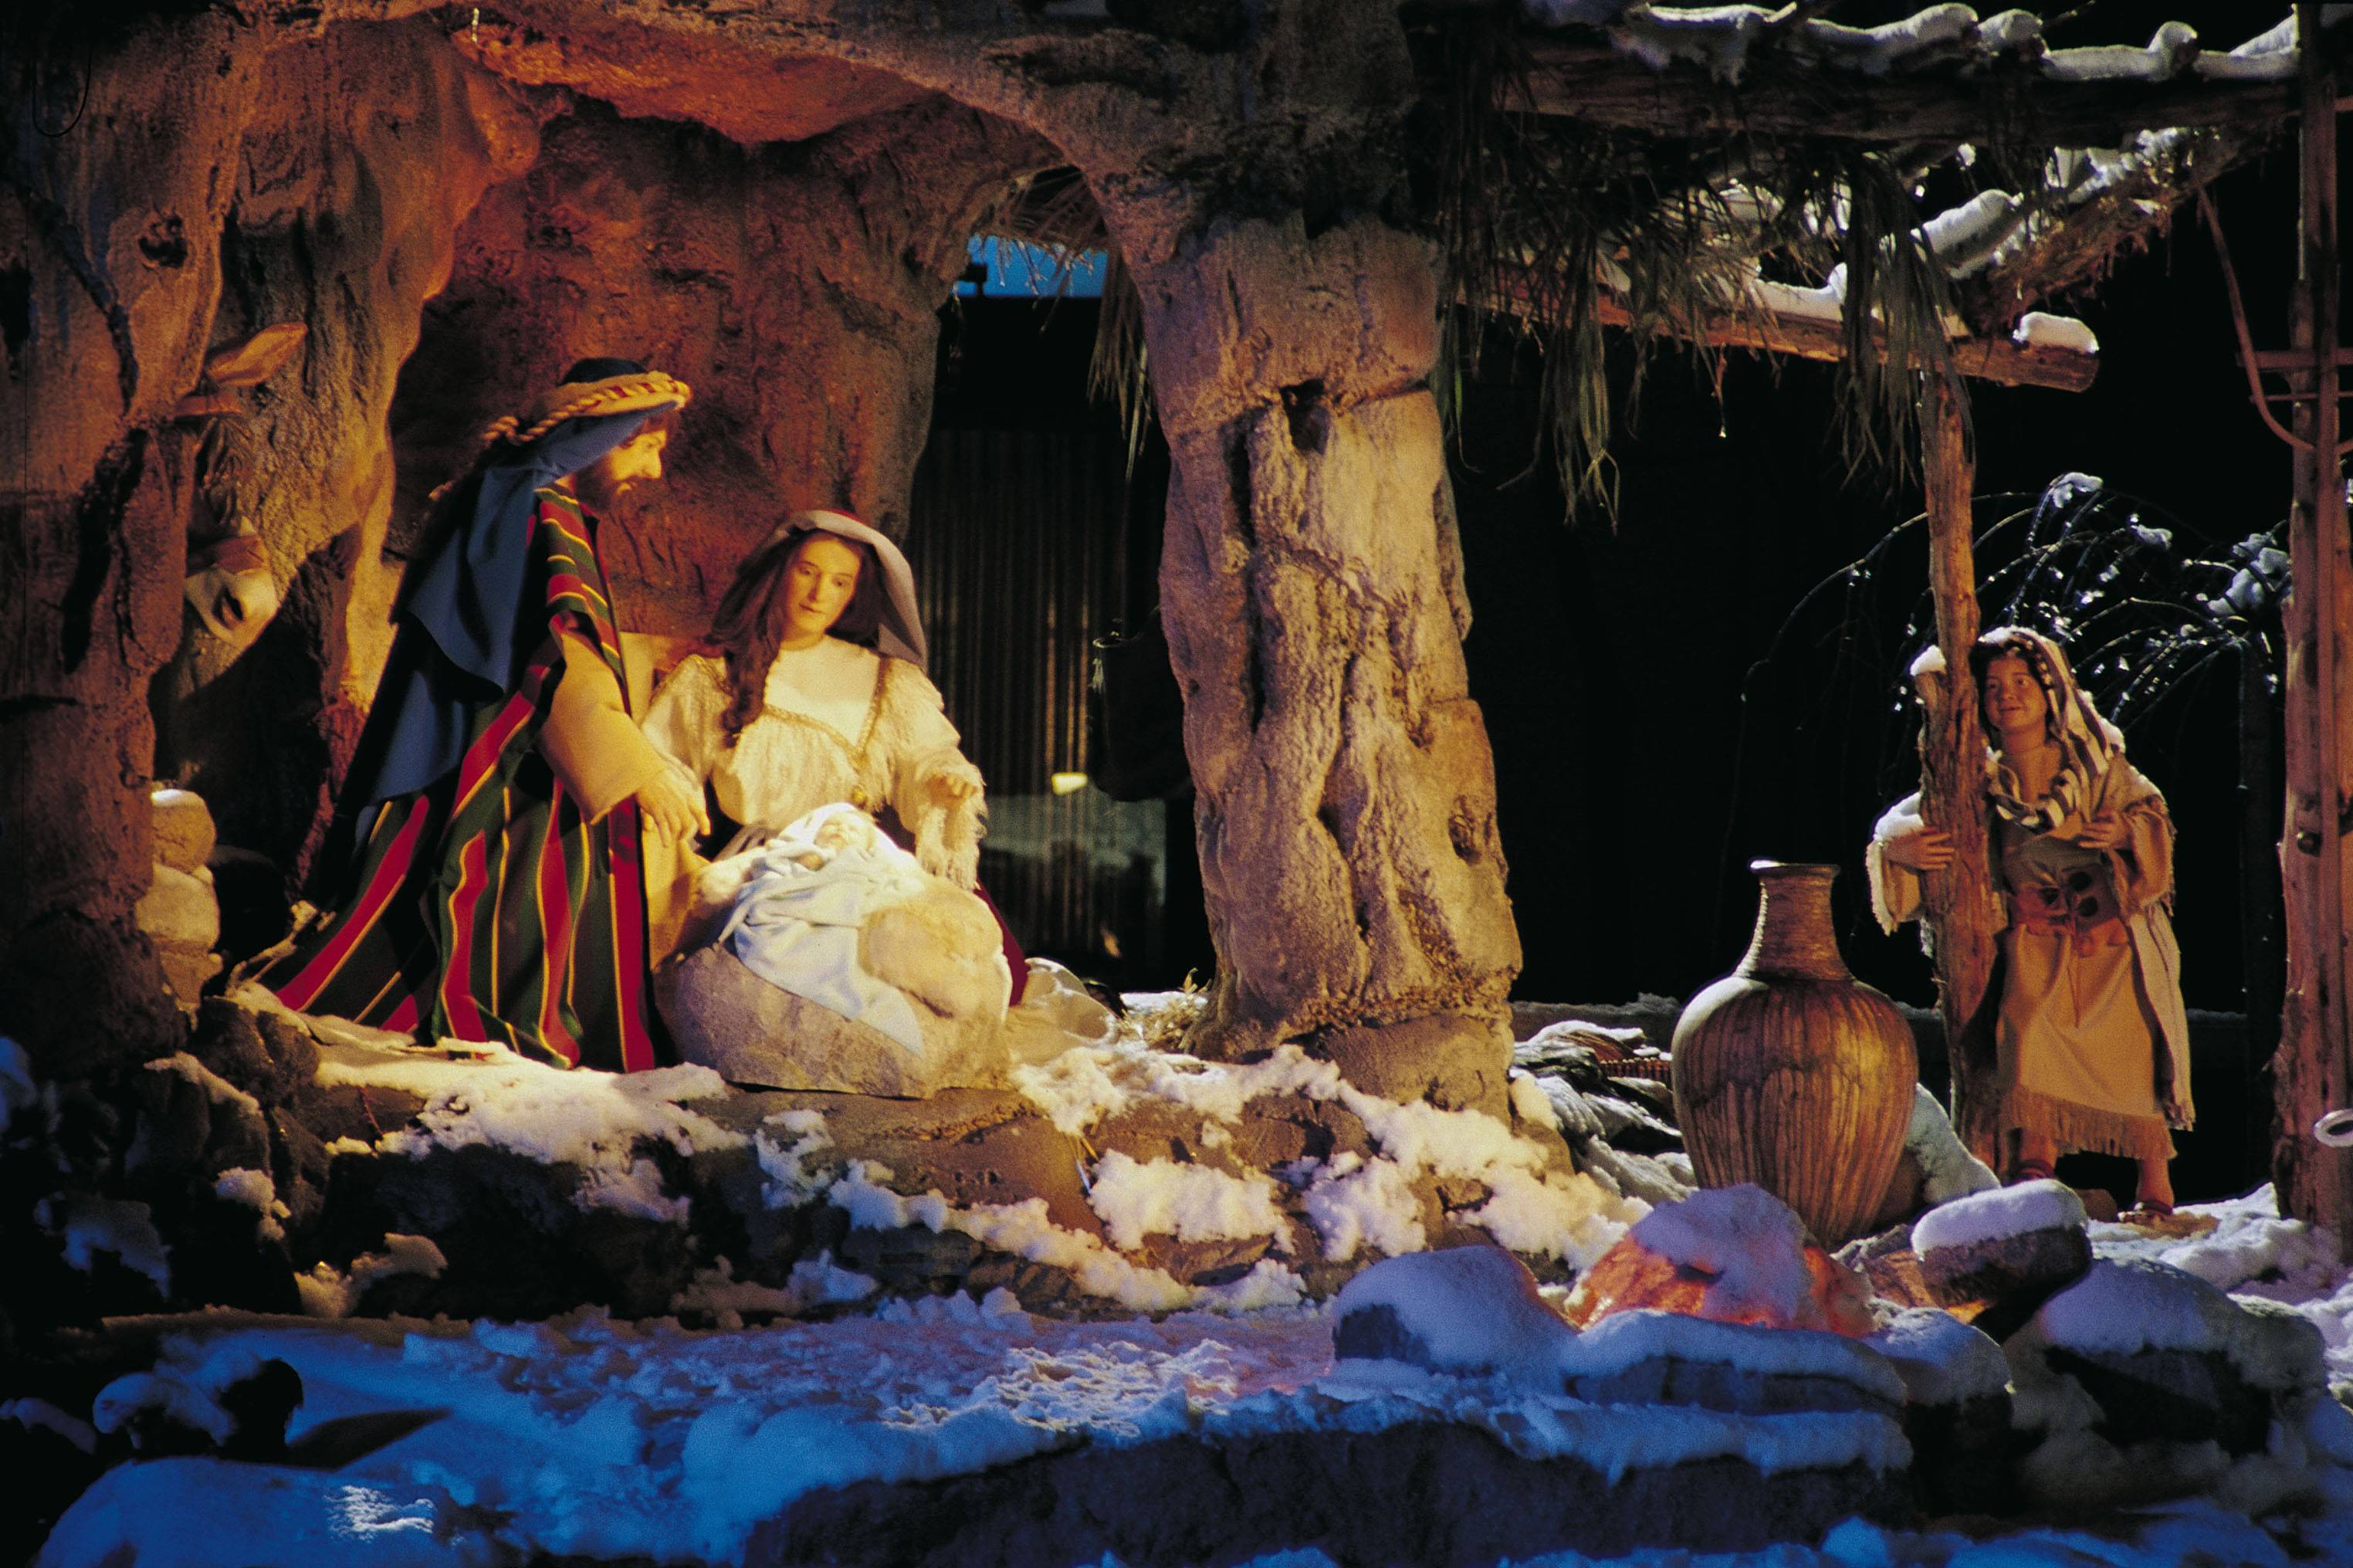 Nativity Scene Desktop Wallpapers - Wallpaper Cave